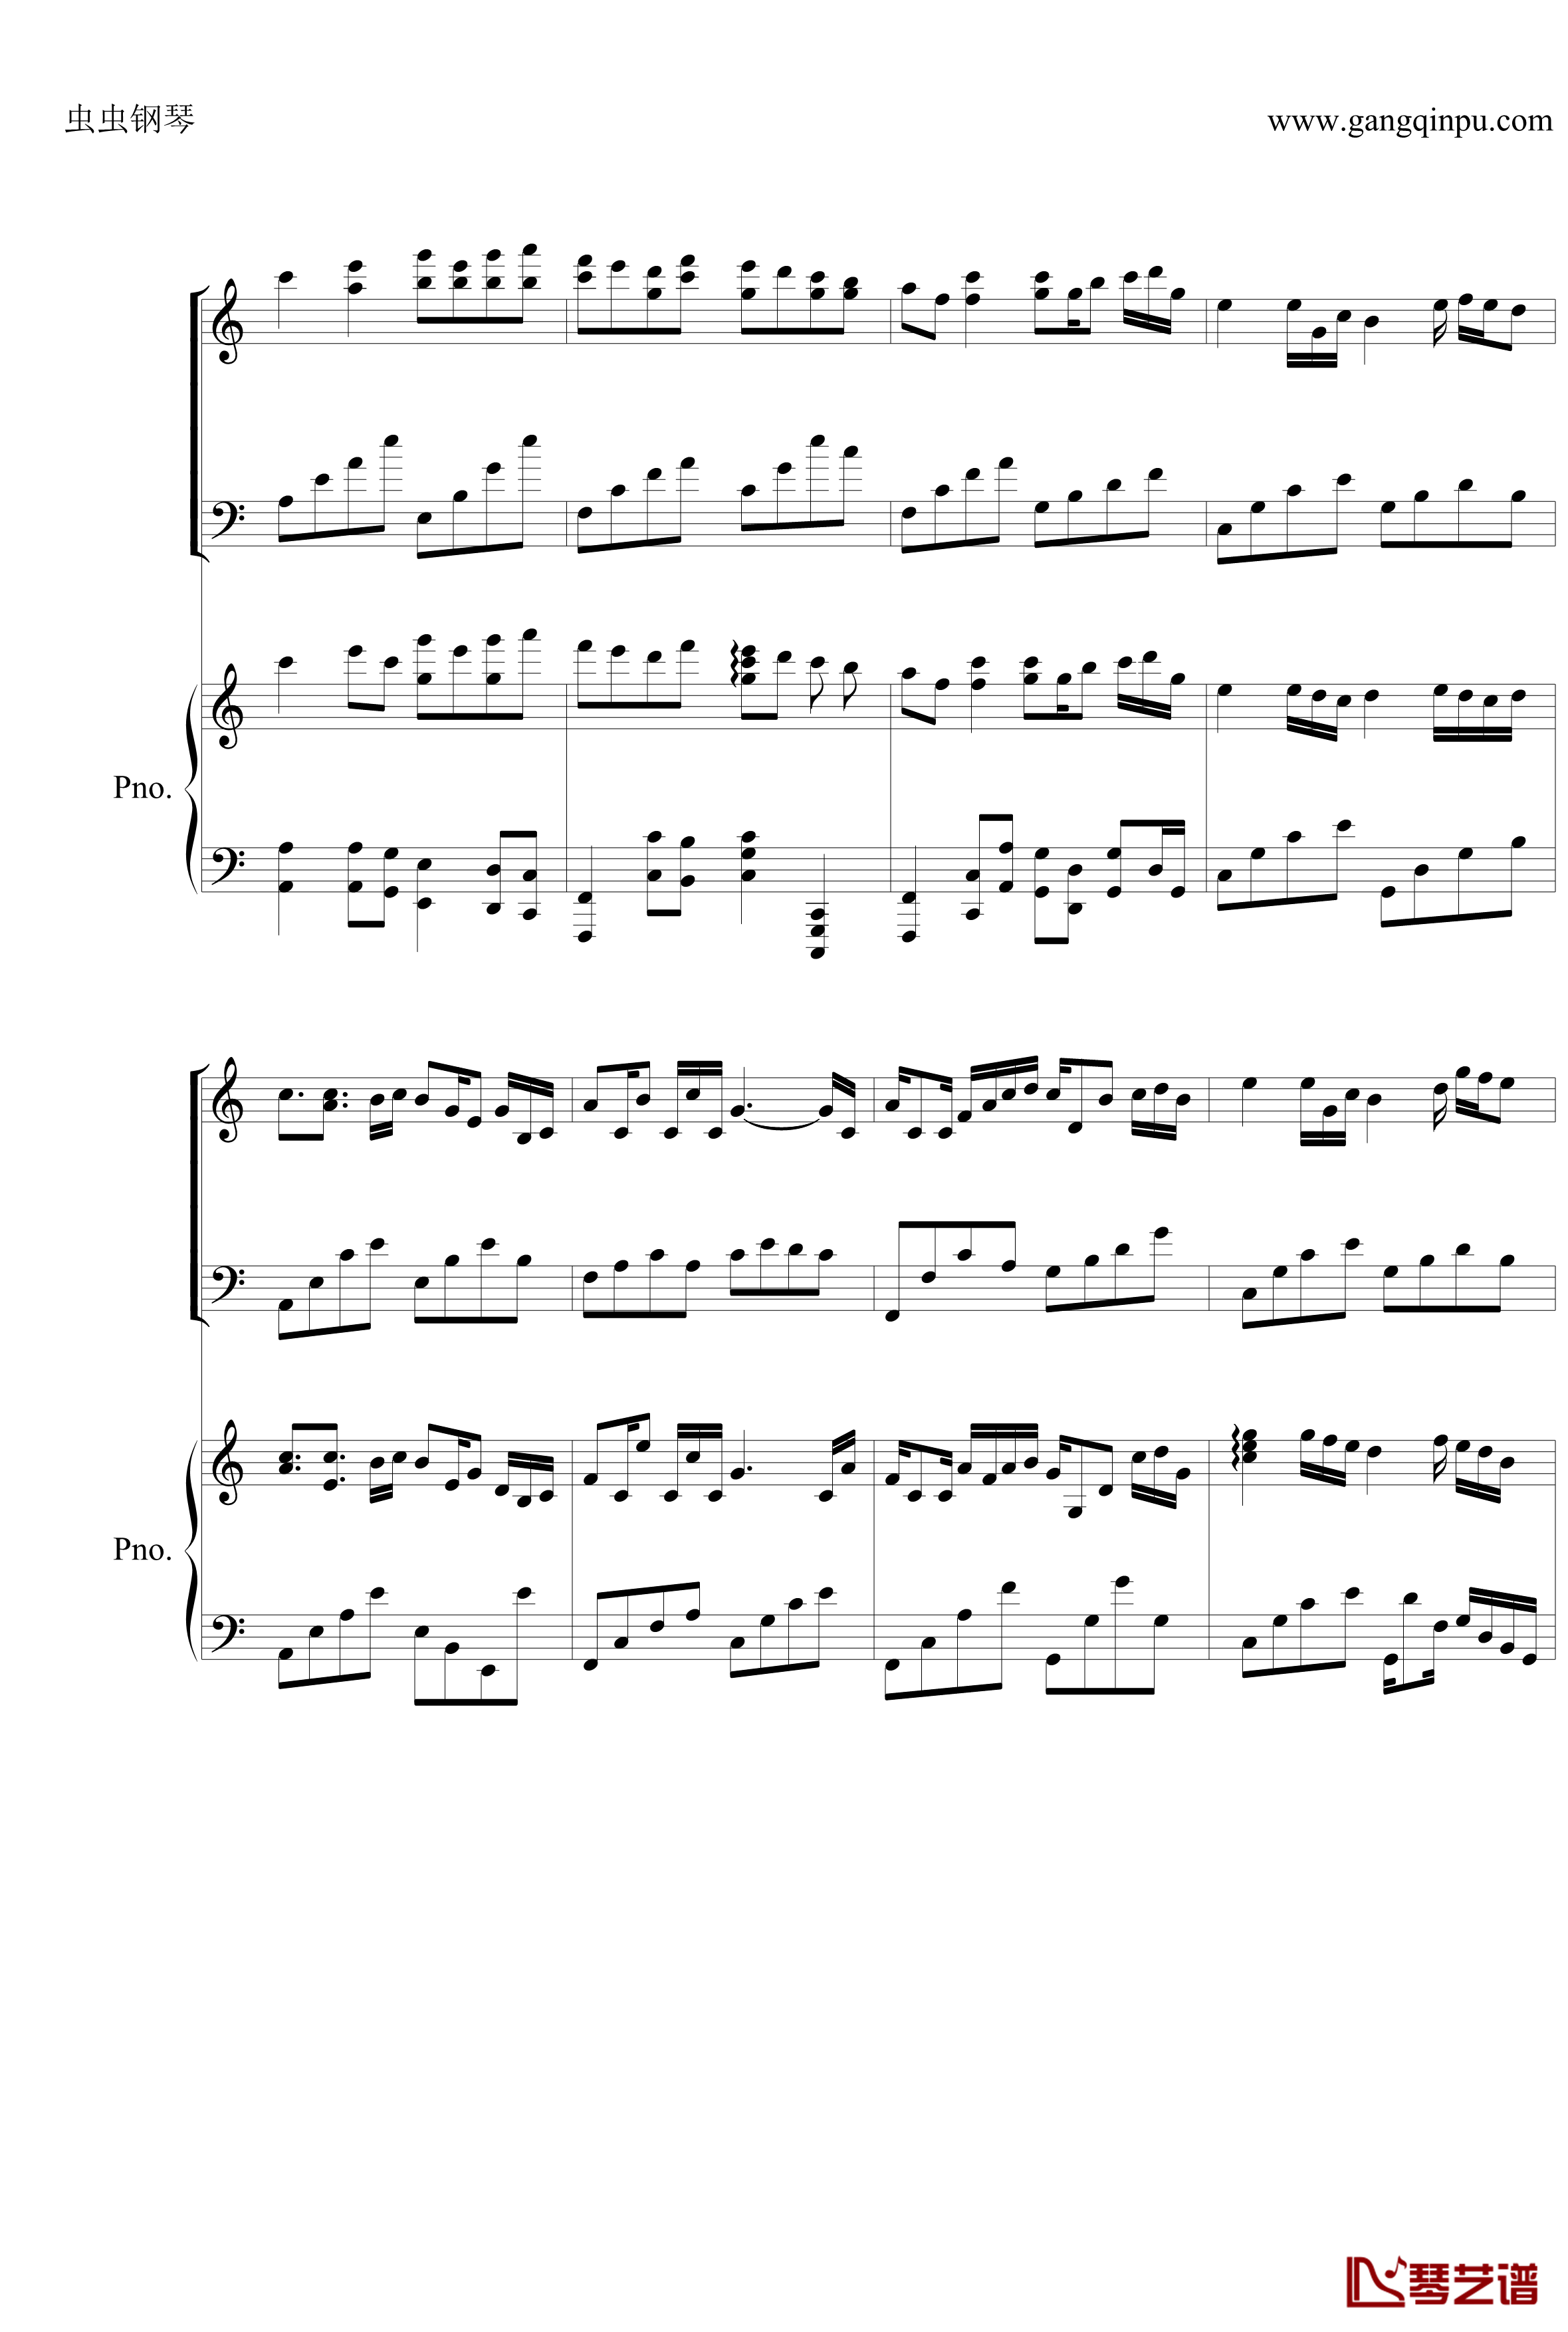 Canon双钢琴钢琴谱-仅供消遣-帕赫贝尔-Pachelbel3